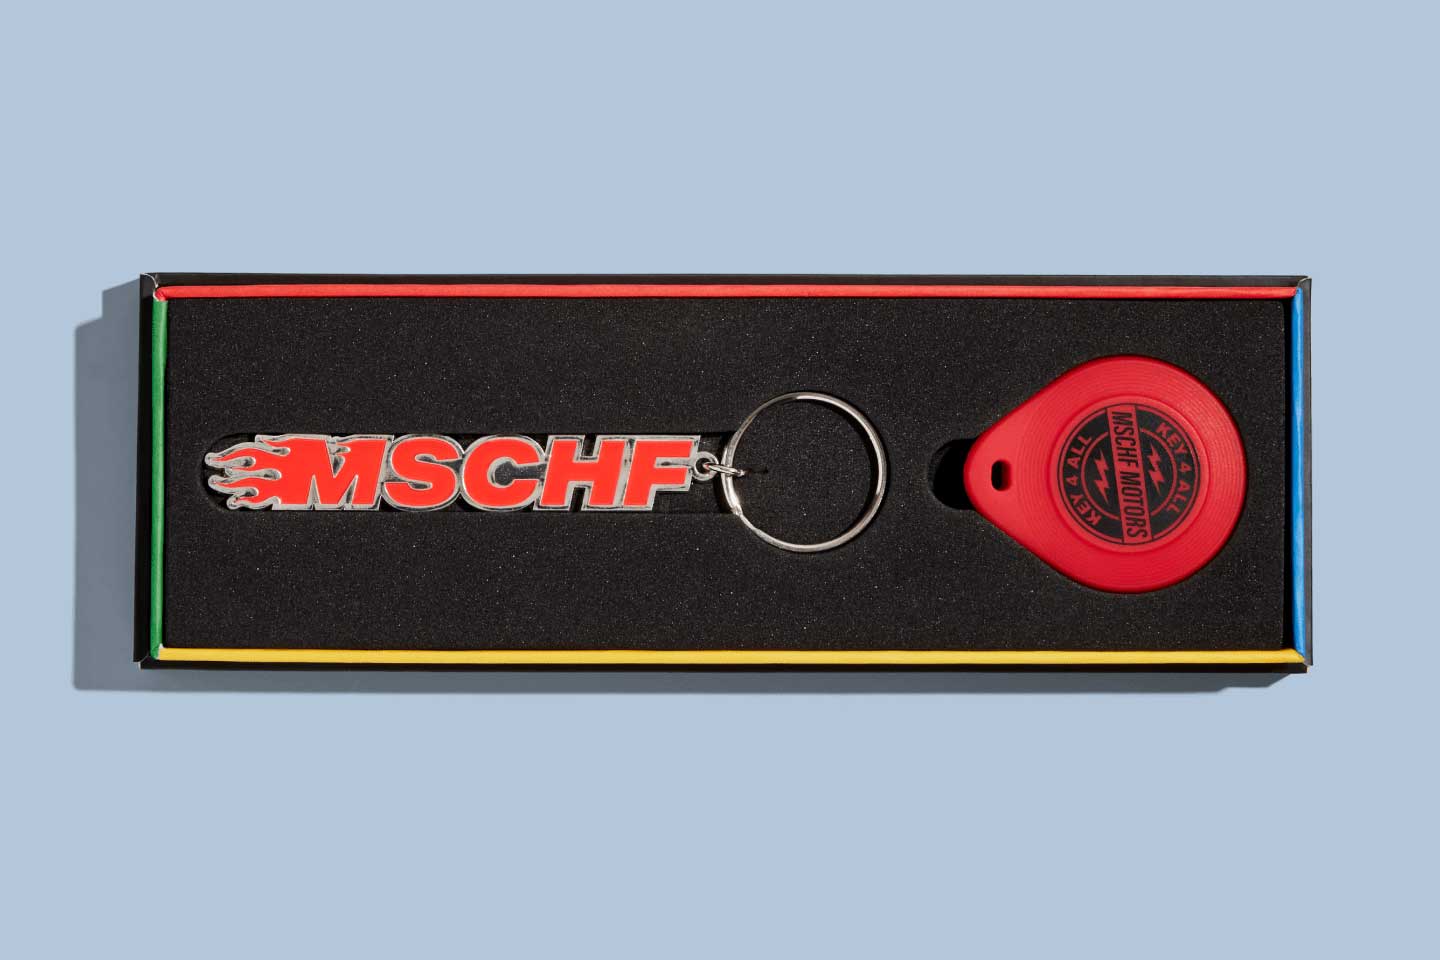 mschf-key-4-all-car-game-gta-drop-game (4)